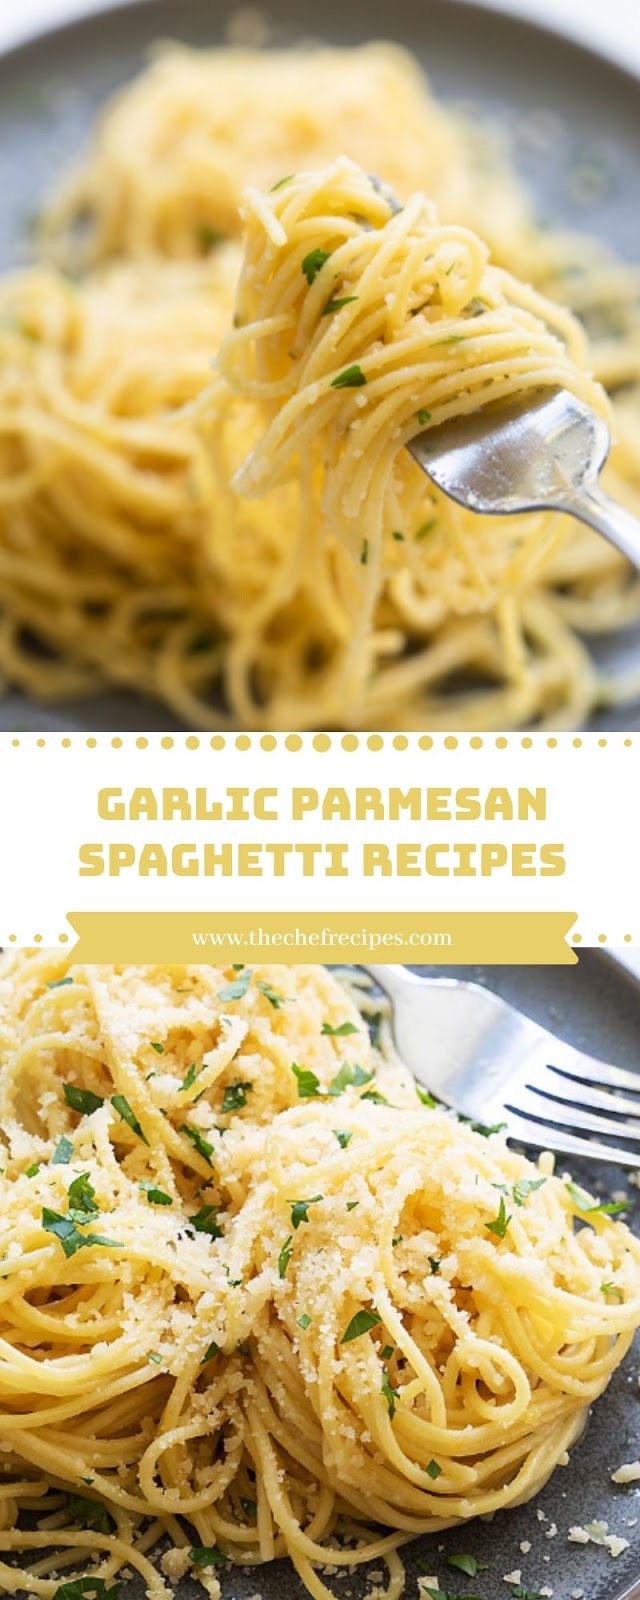 Garlic Parmesan spaghetti Recipes